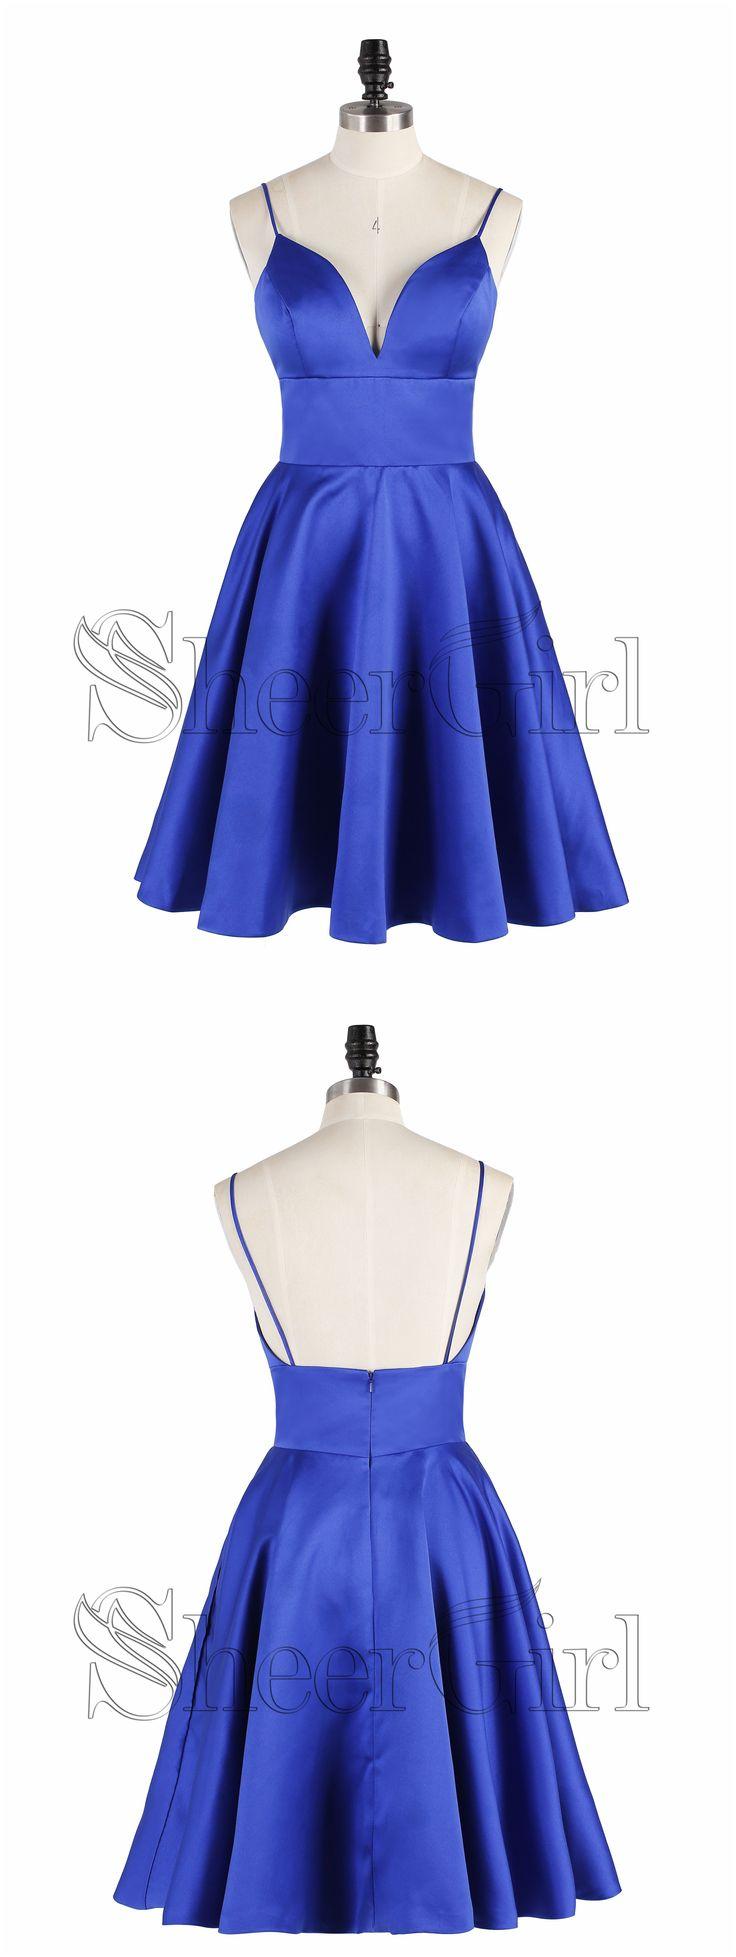 Wedding - Spaghetti Strap Royal Blue Homecoming Dresses V Neck Satin Cocktail Dress ARD1459